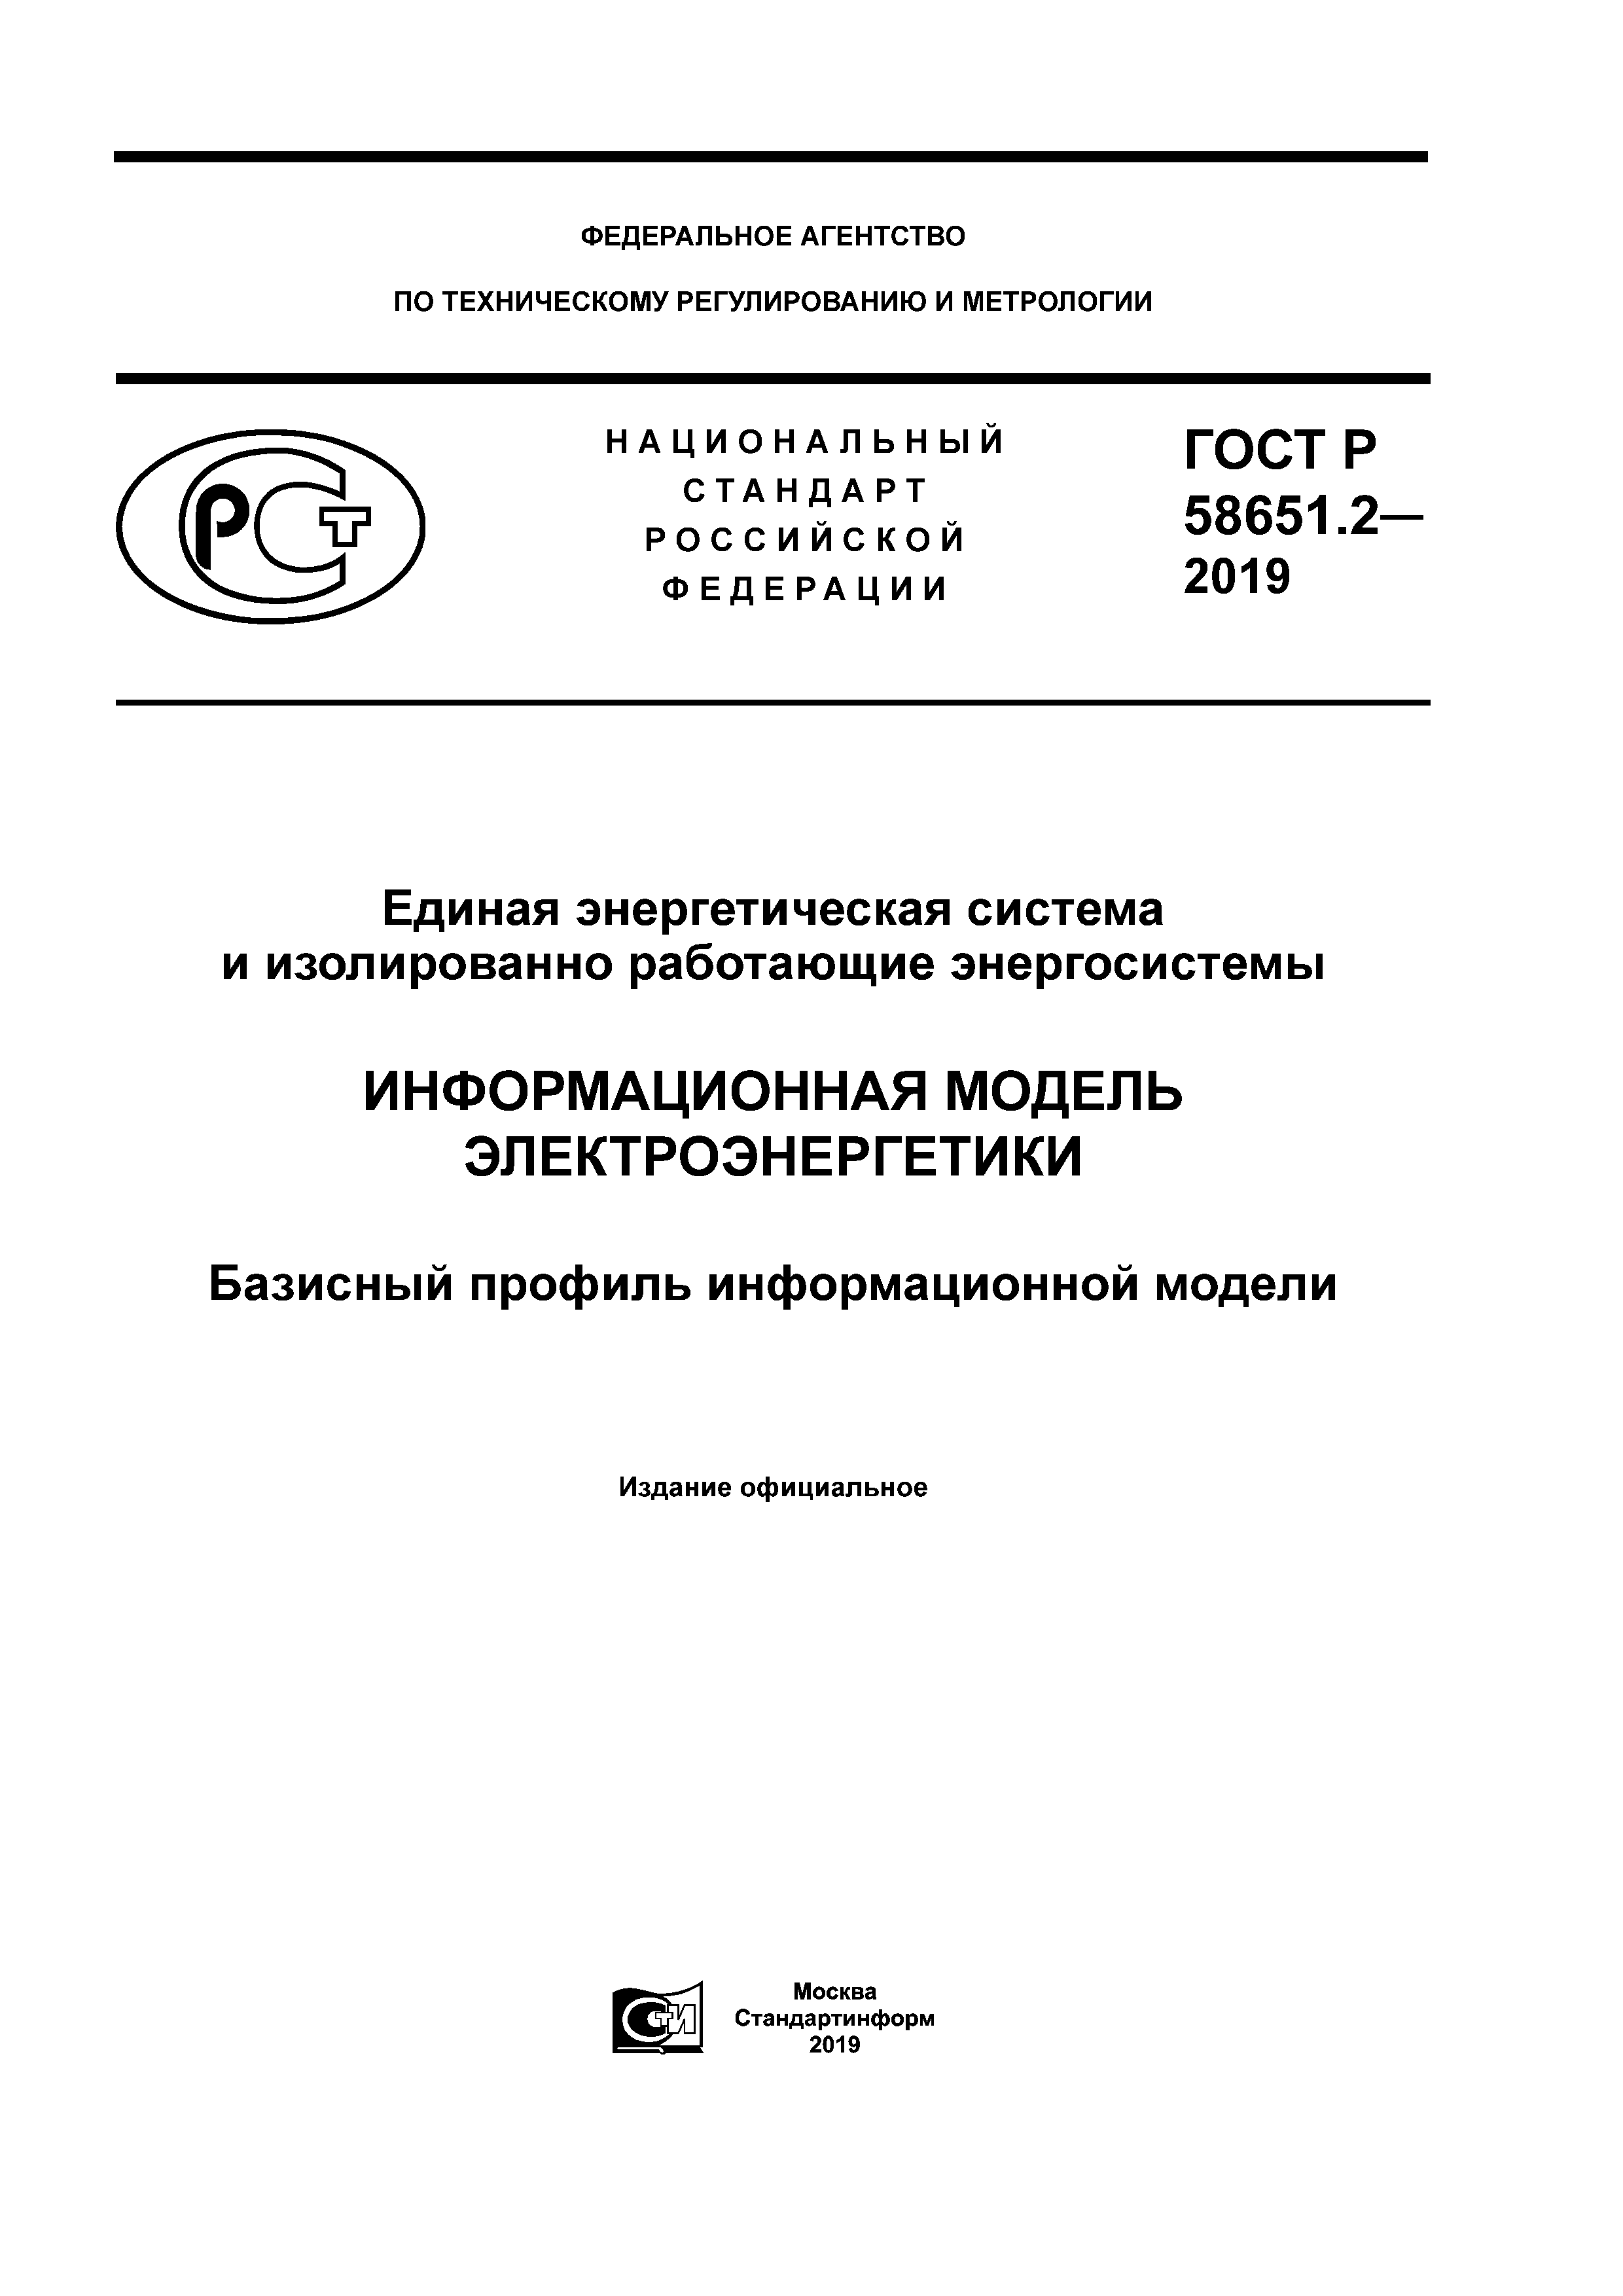 ГОСТ Р 58651.2-2019